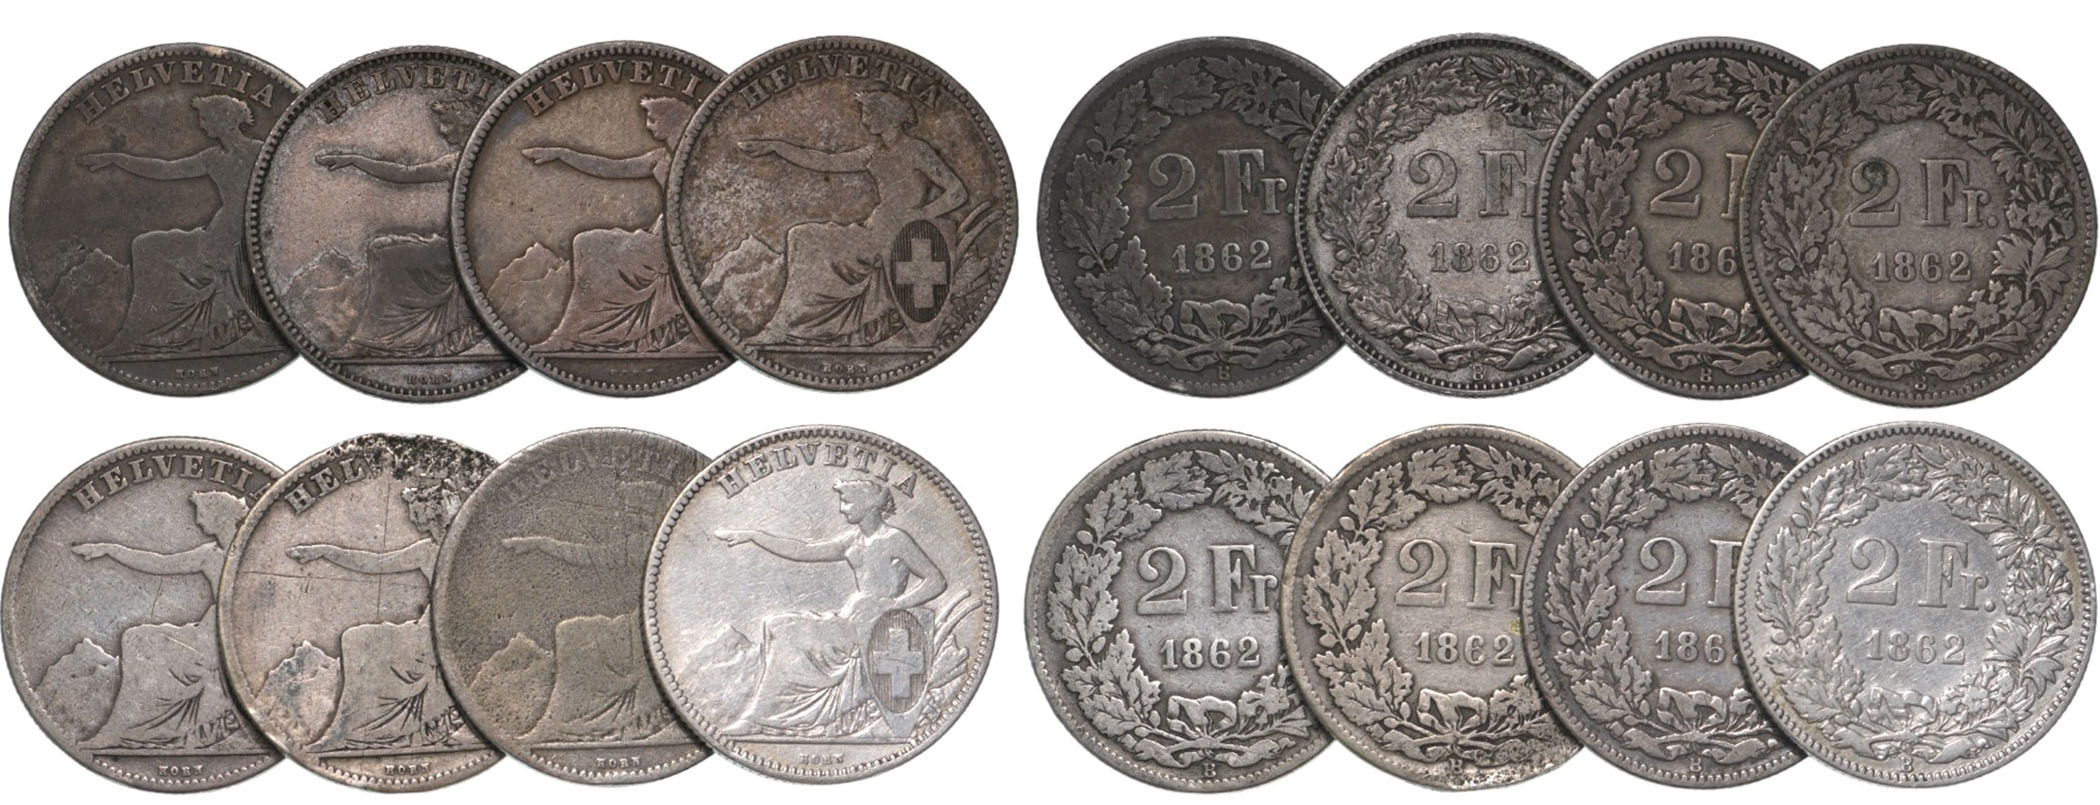 2 Francs 1862, Lot of 8 Coins